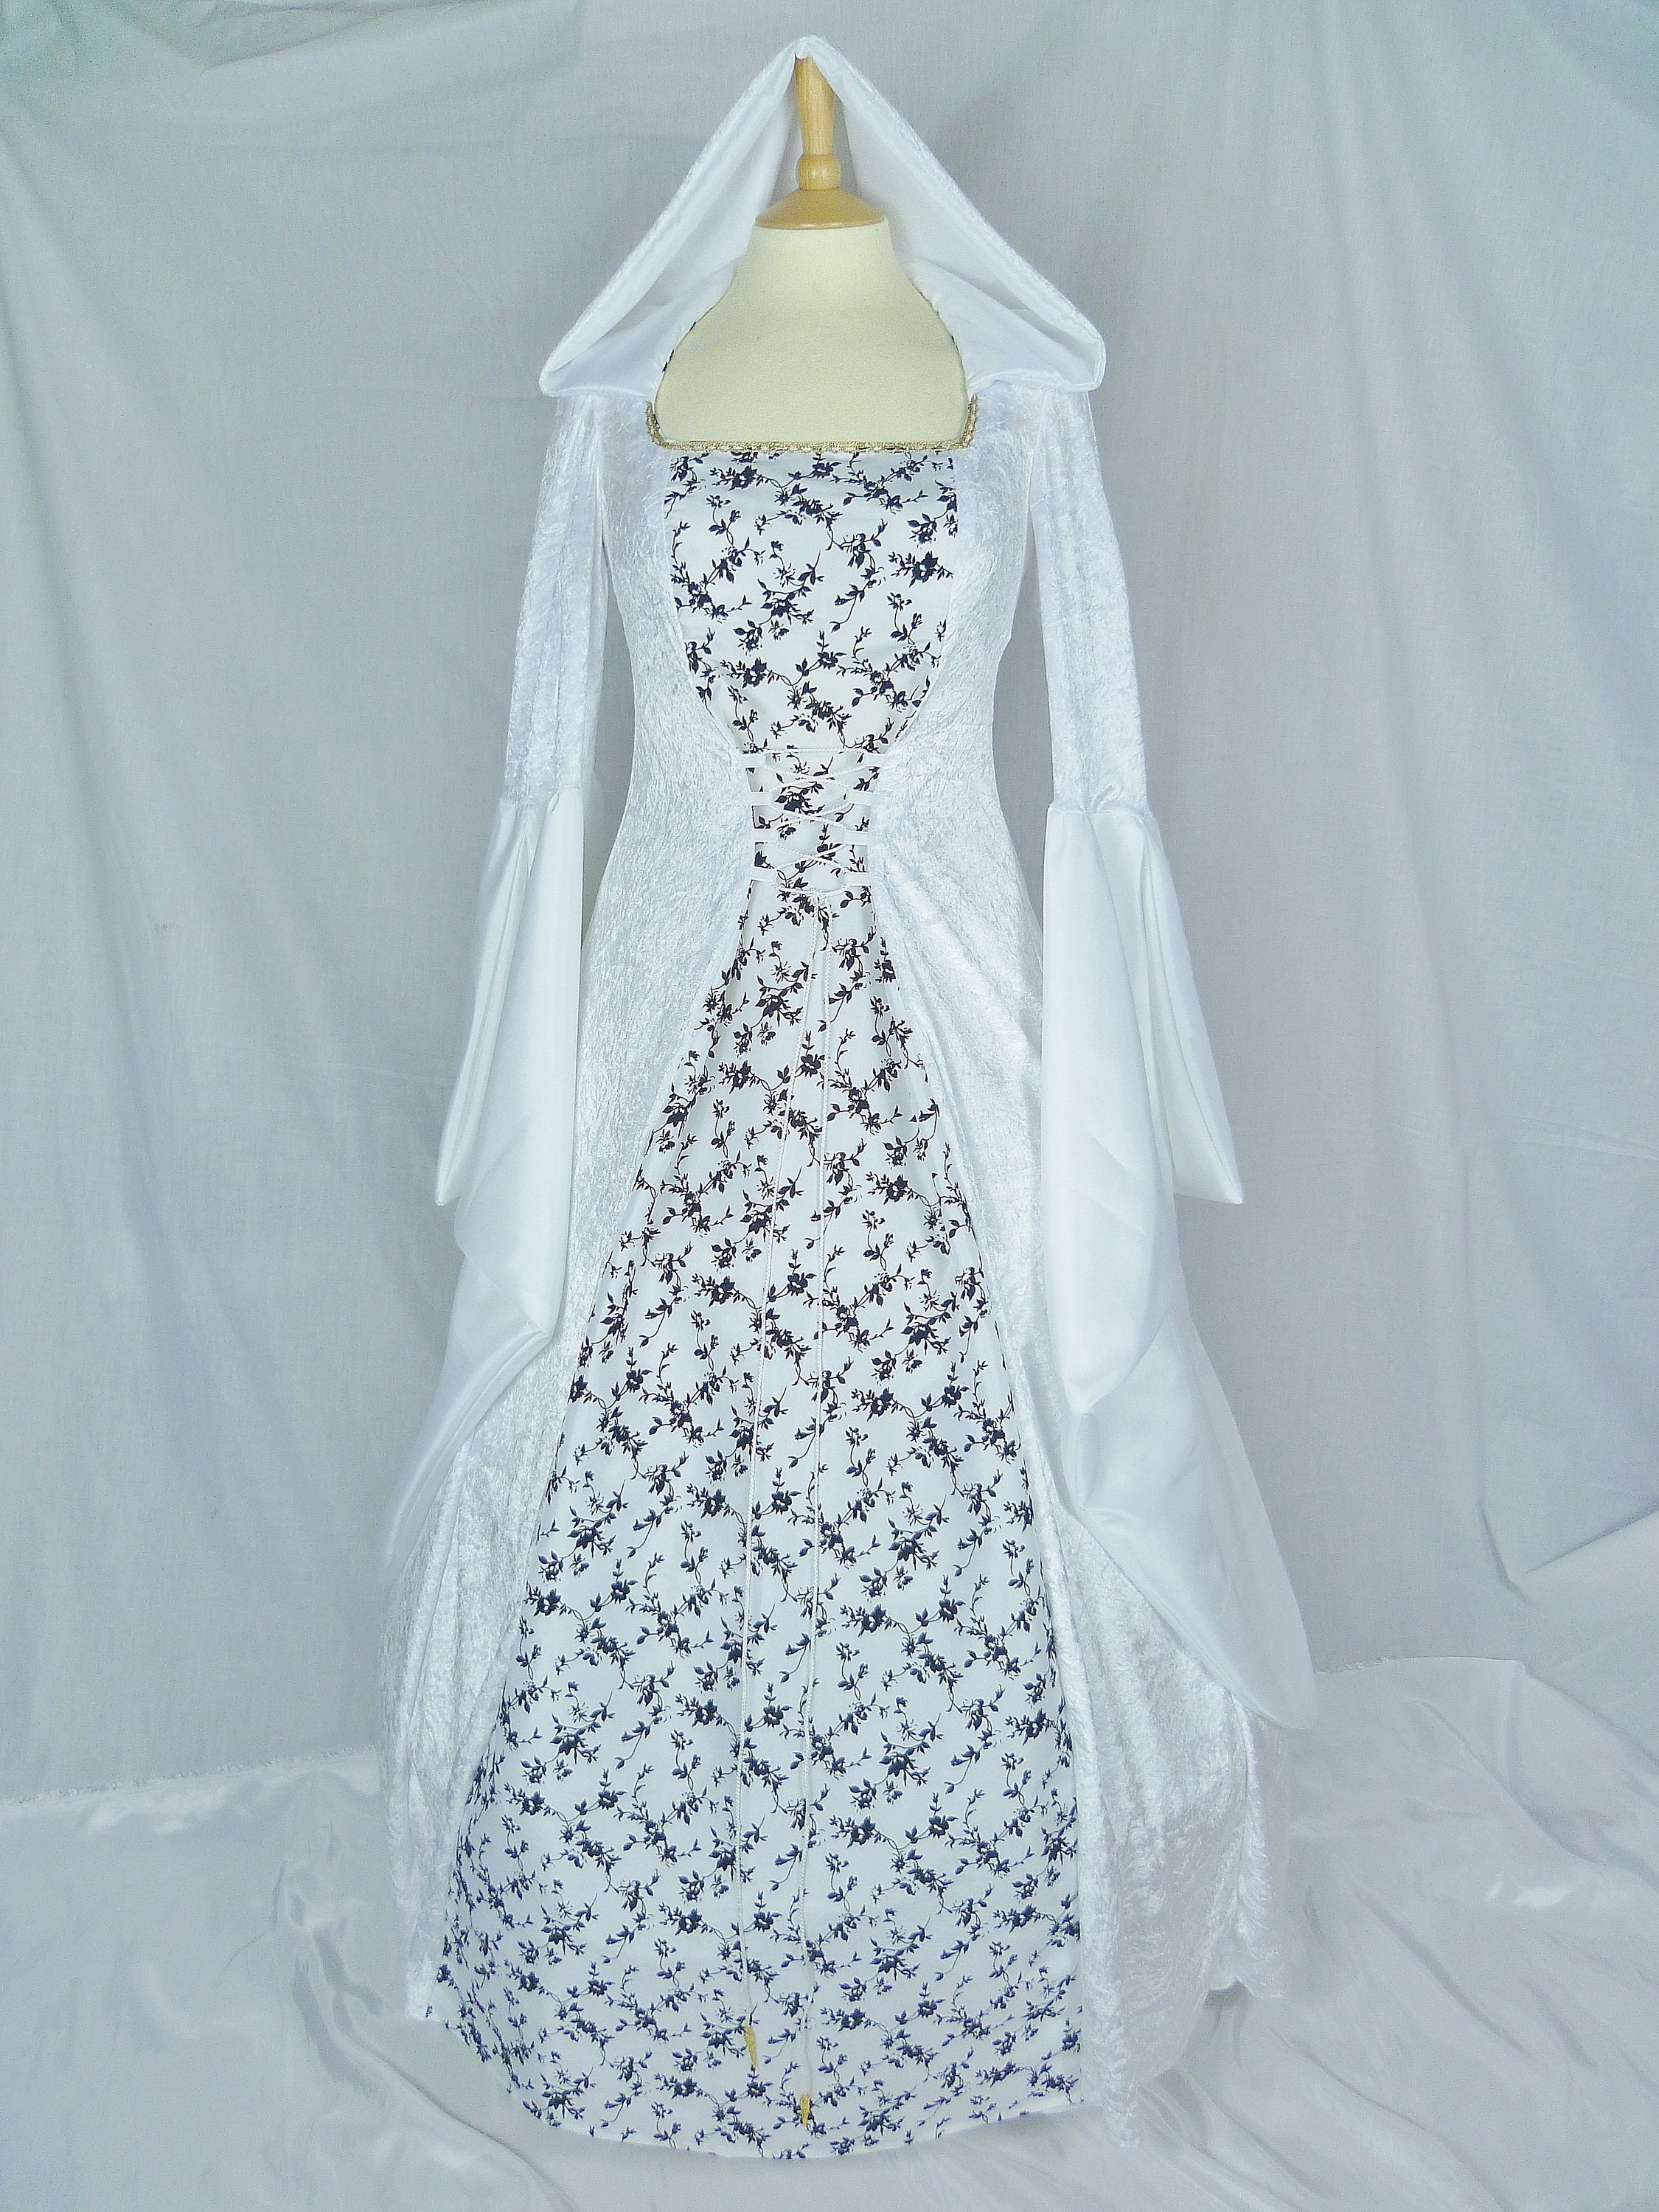 Medieval Wedding Dress White and Black Renaissance Gown | Etsy UK